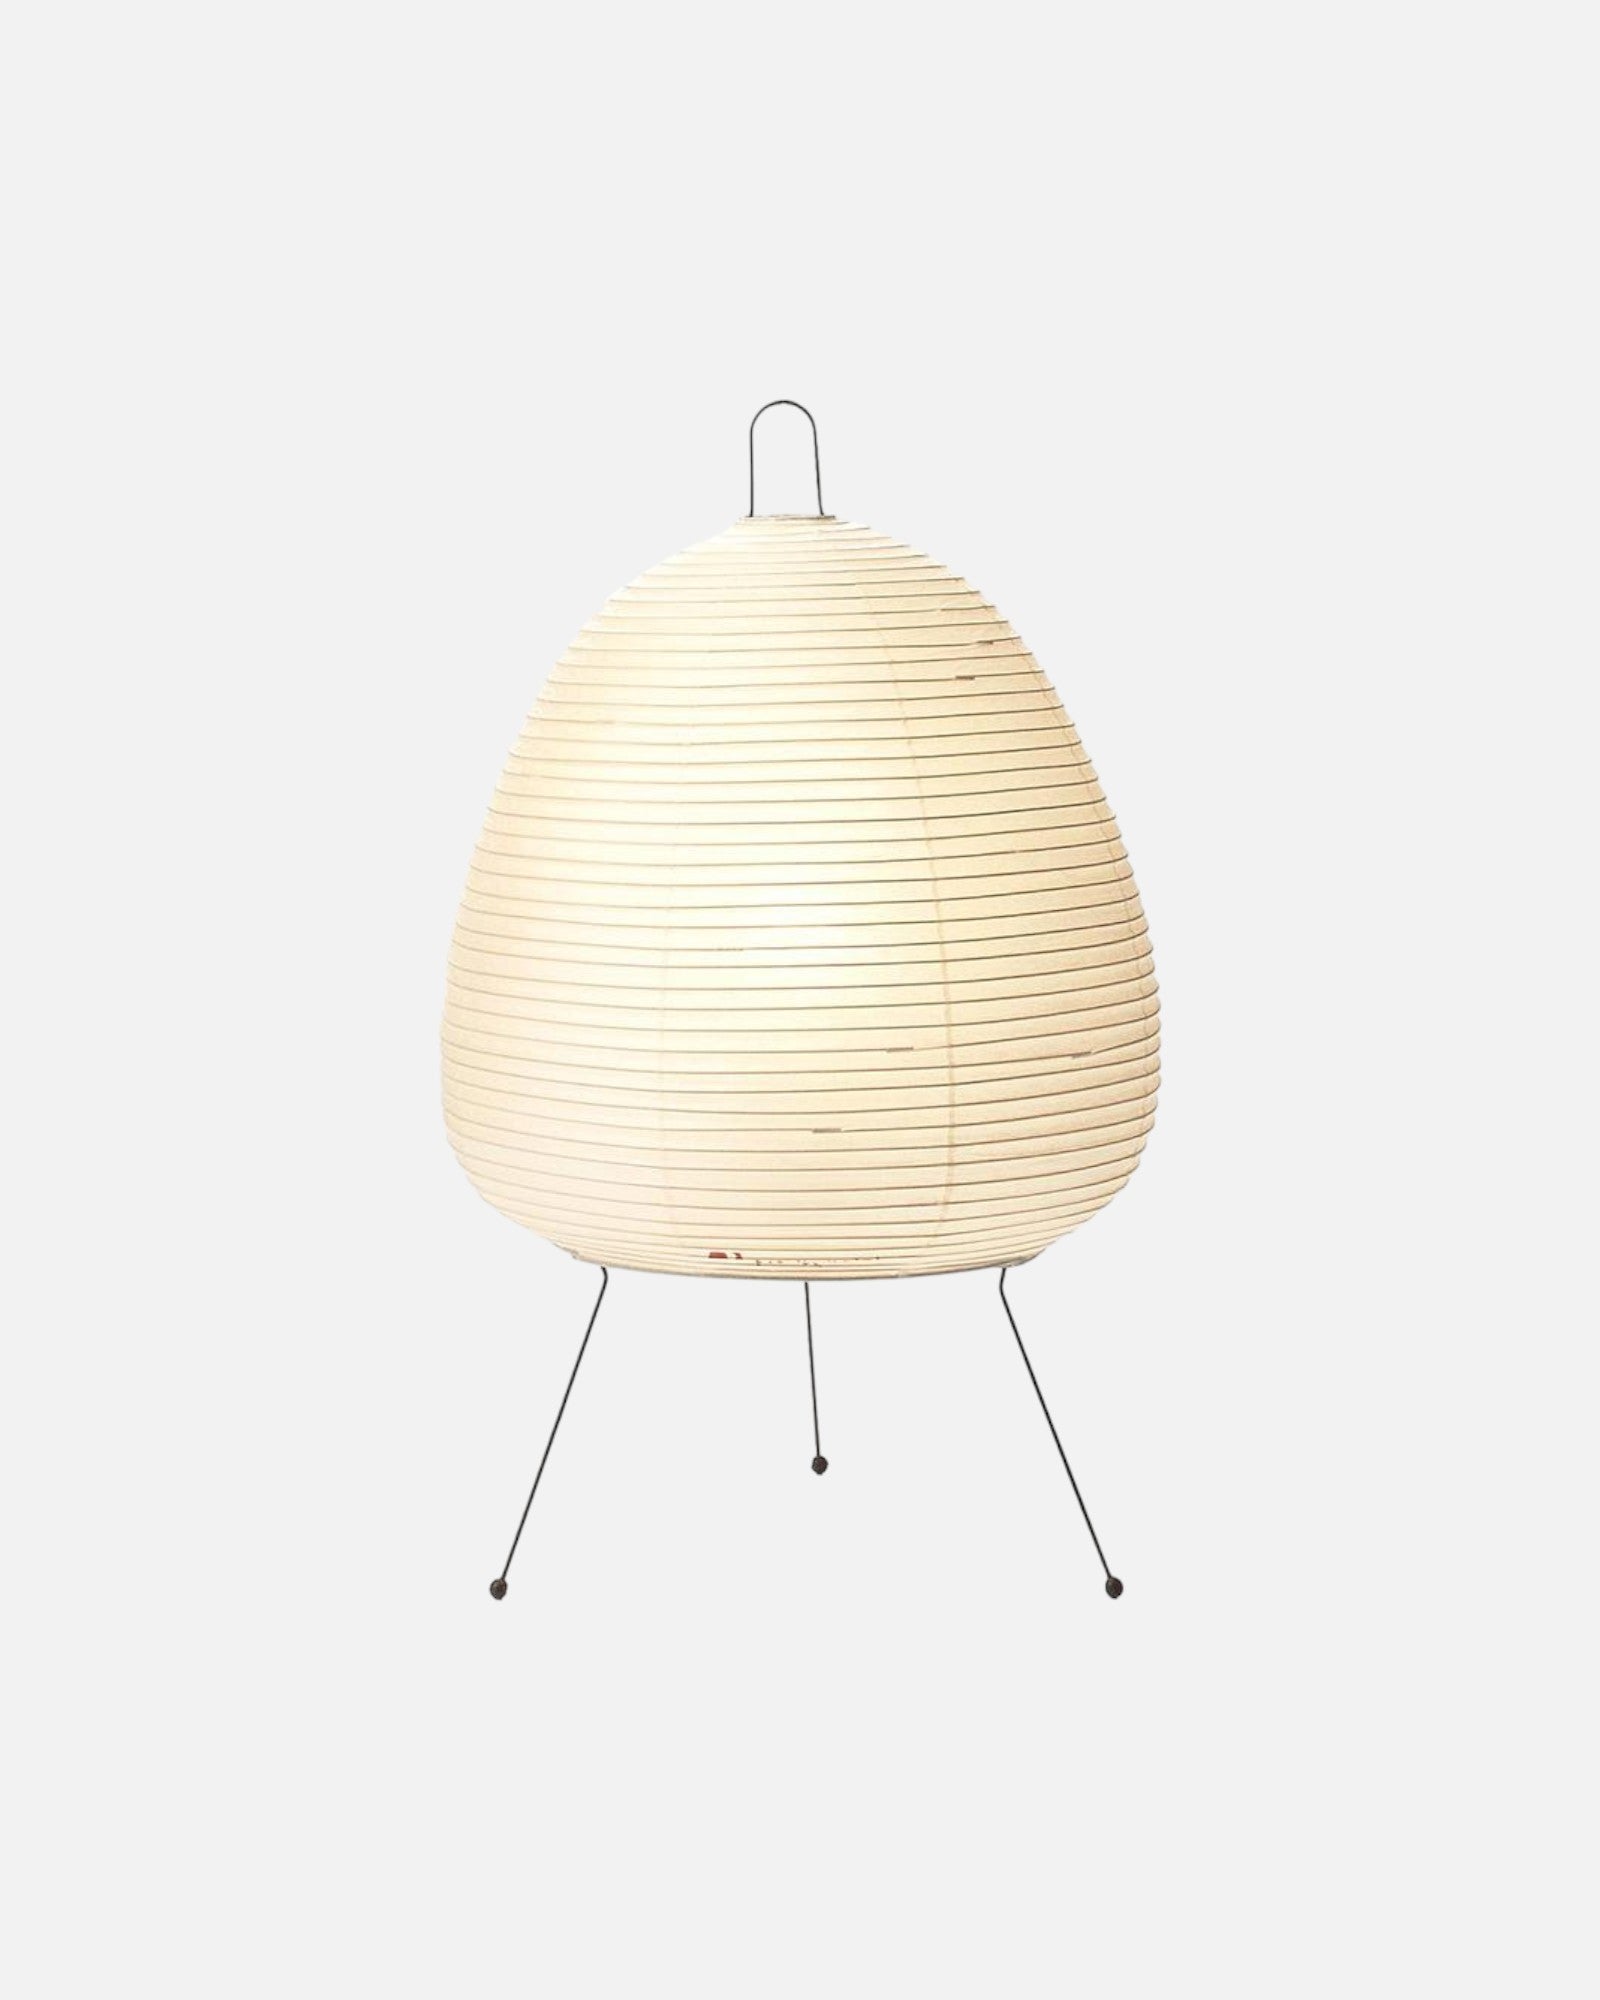 Raitini Rice Paper Lantern - ModAura Designs